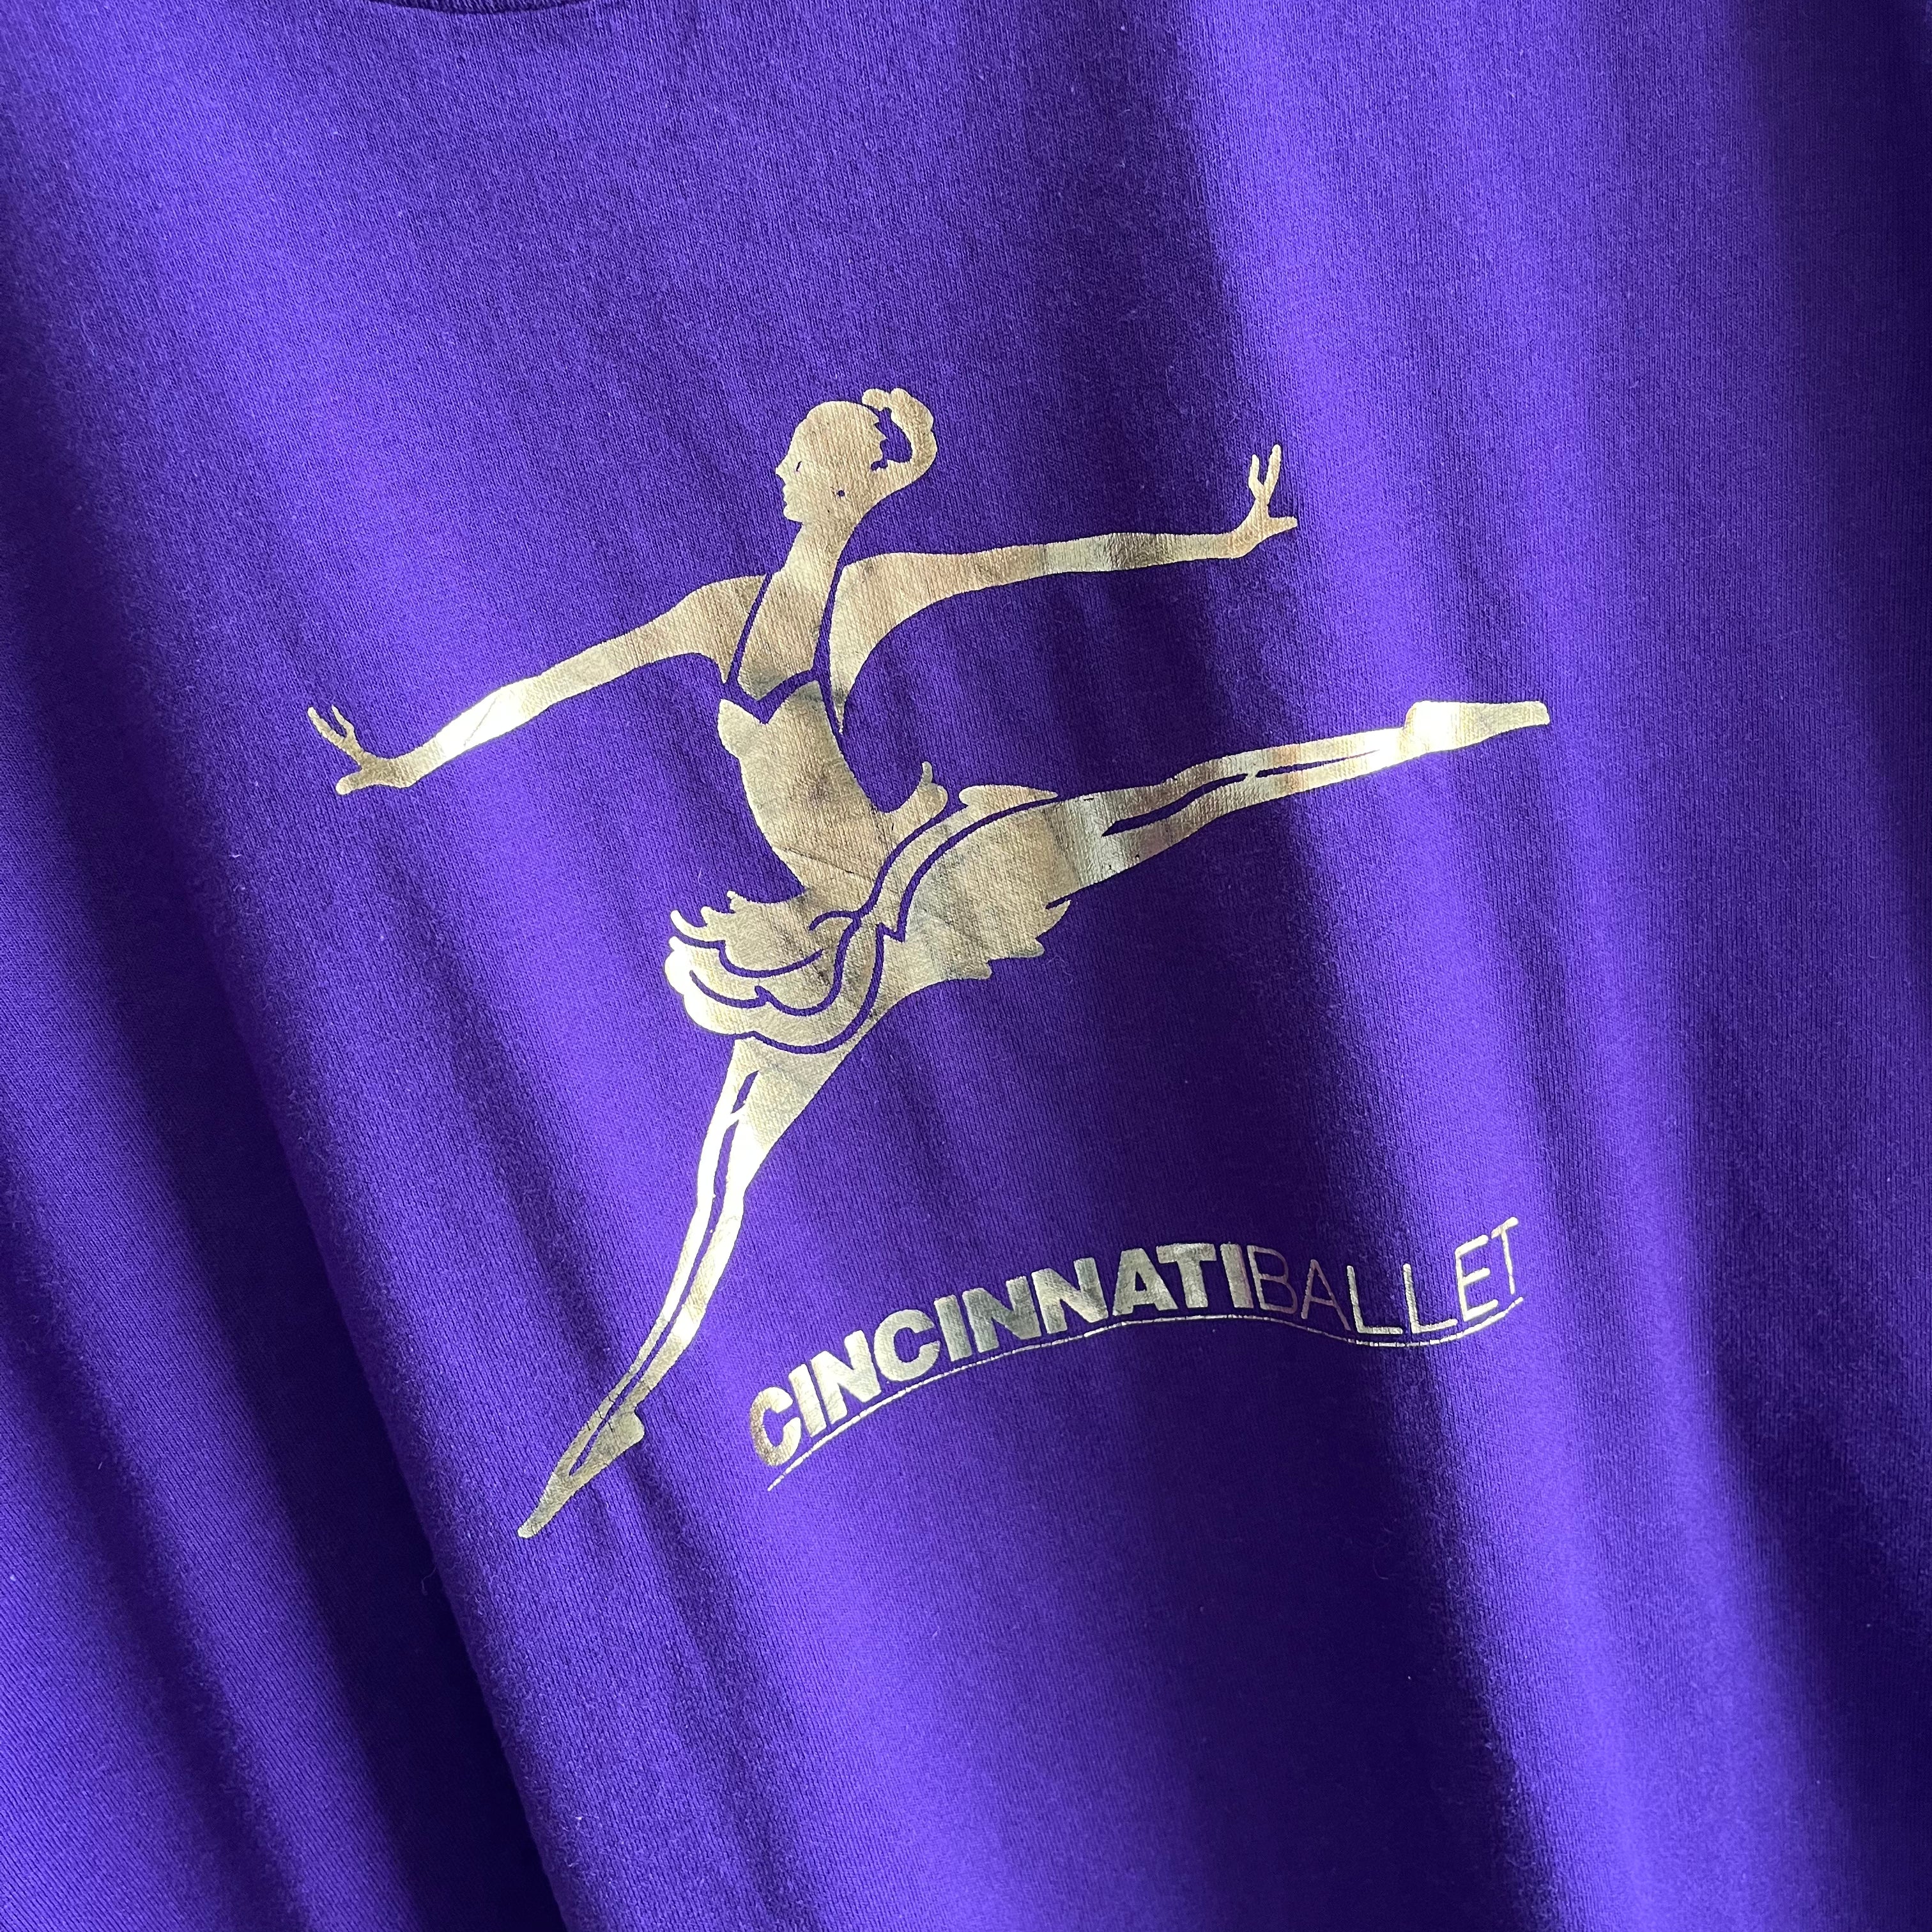 1980/90s Cincinnati Ballet T-Shirt